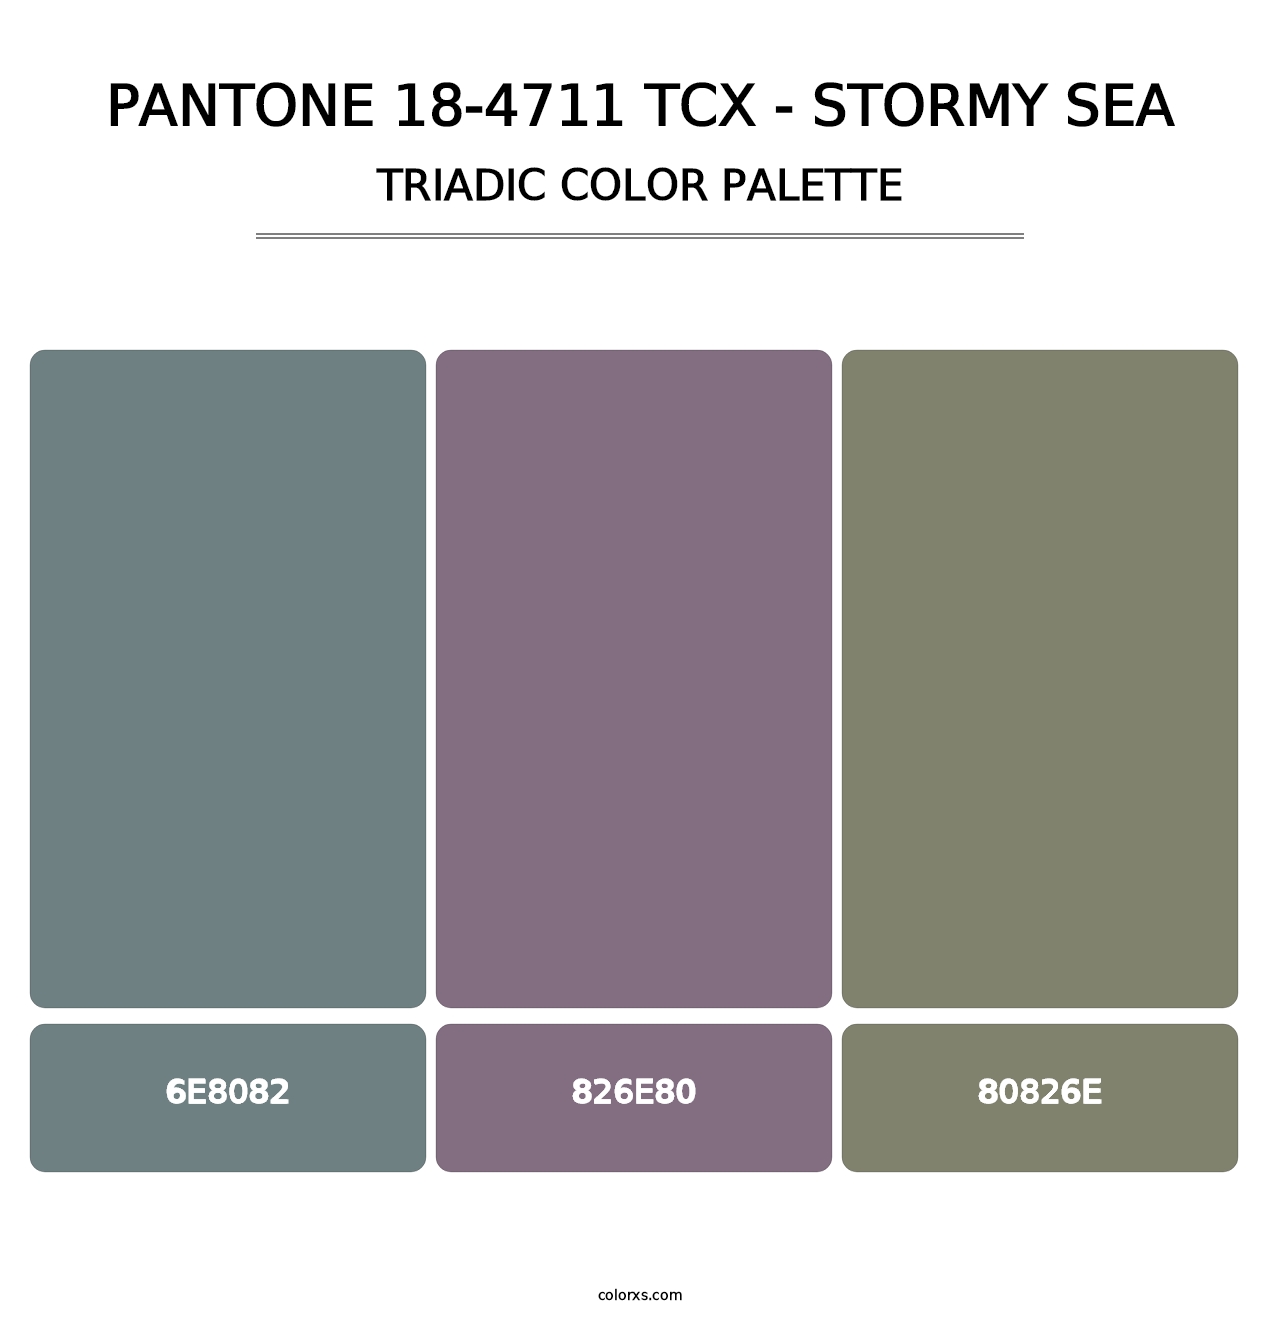 PANTONE 18-4711 TCX - Stormy Sea - Triadic Color Palette